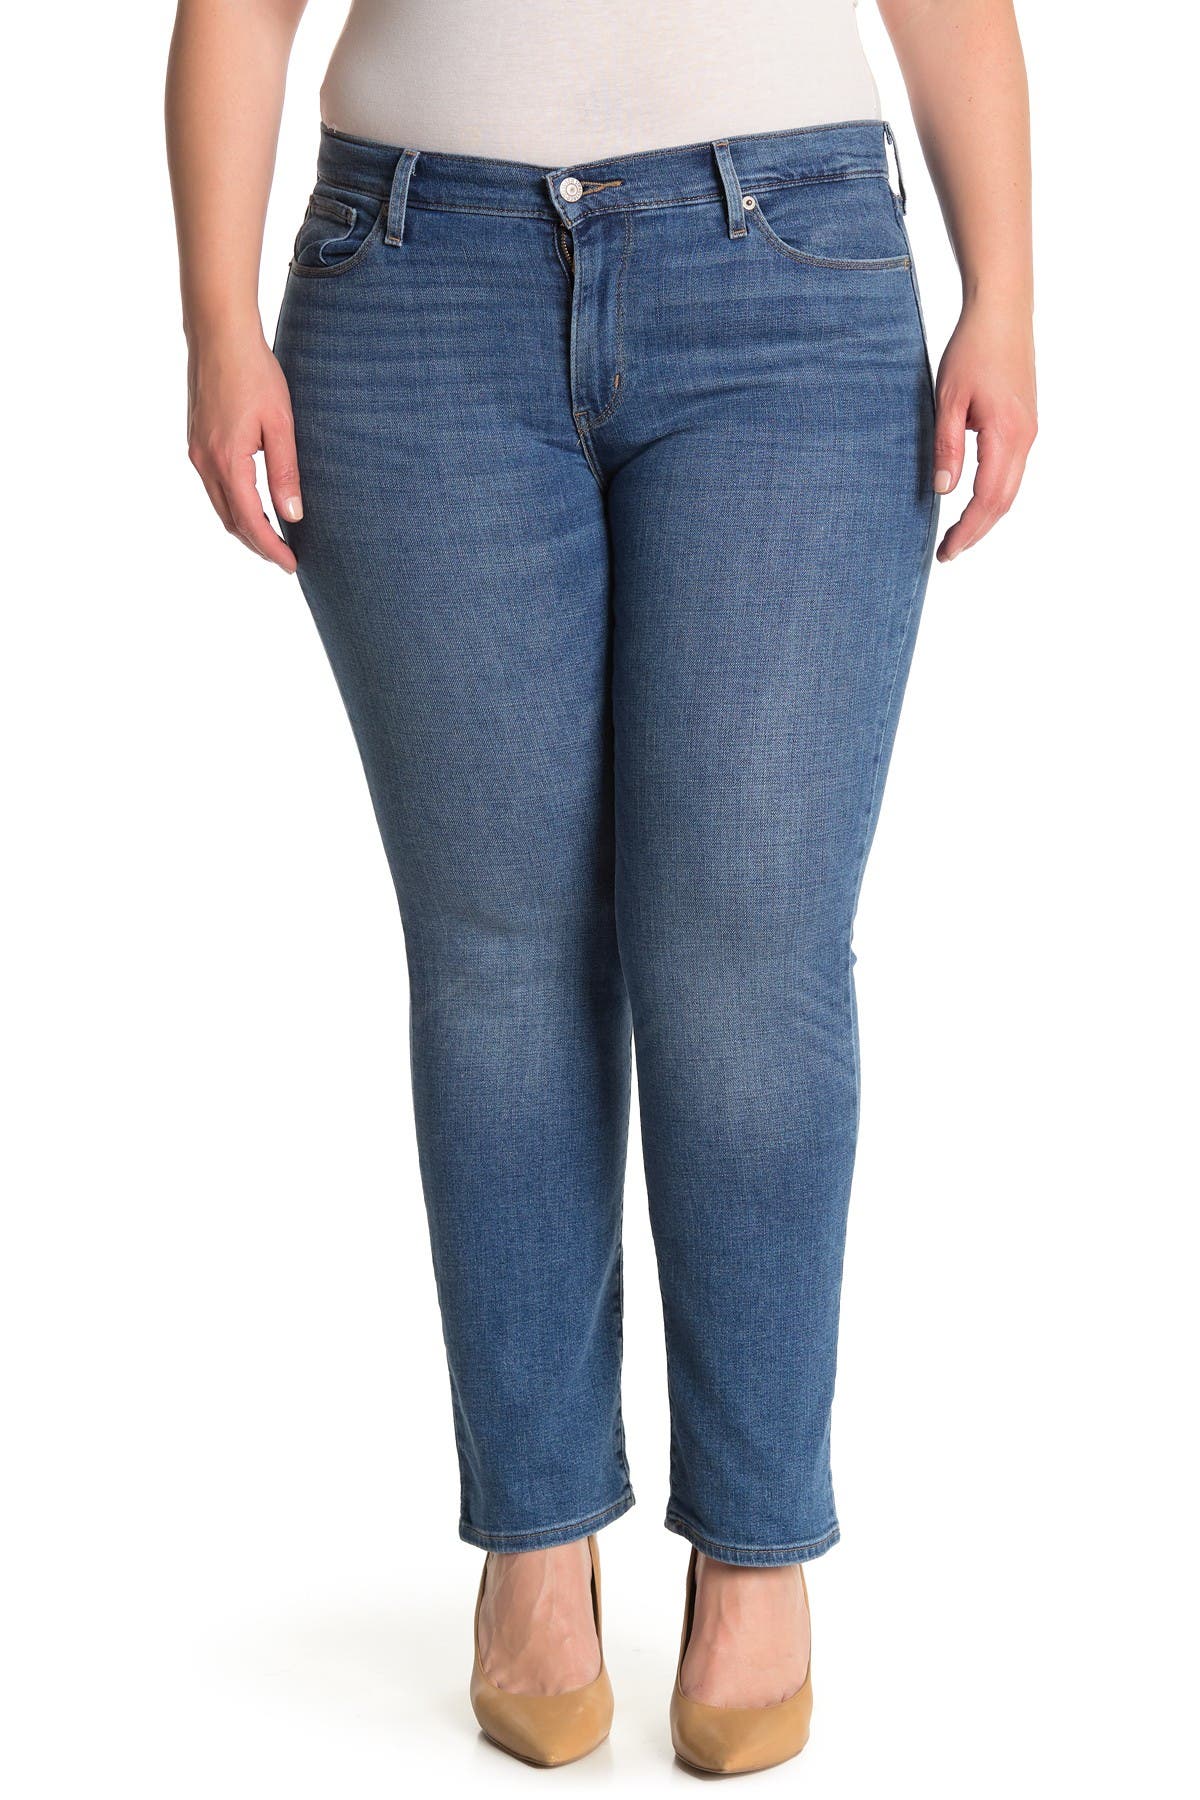 levi's women's 414 classic straight jeans